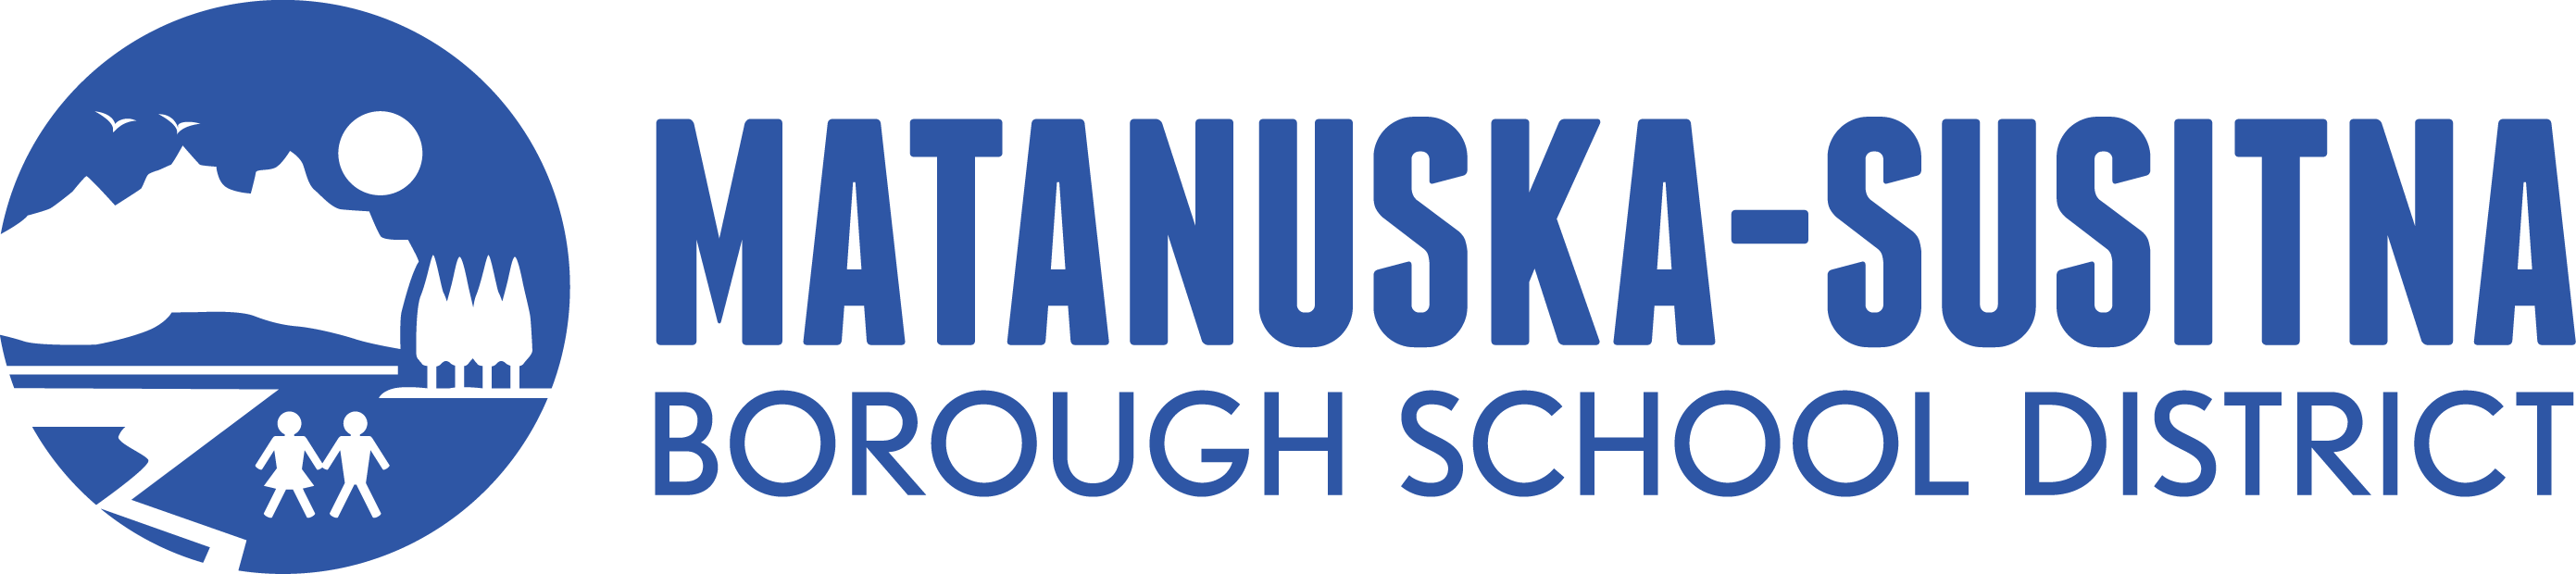 Matanuska–Susitna Borough School District - banner